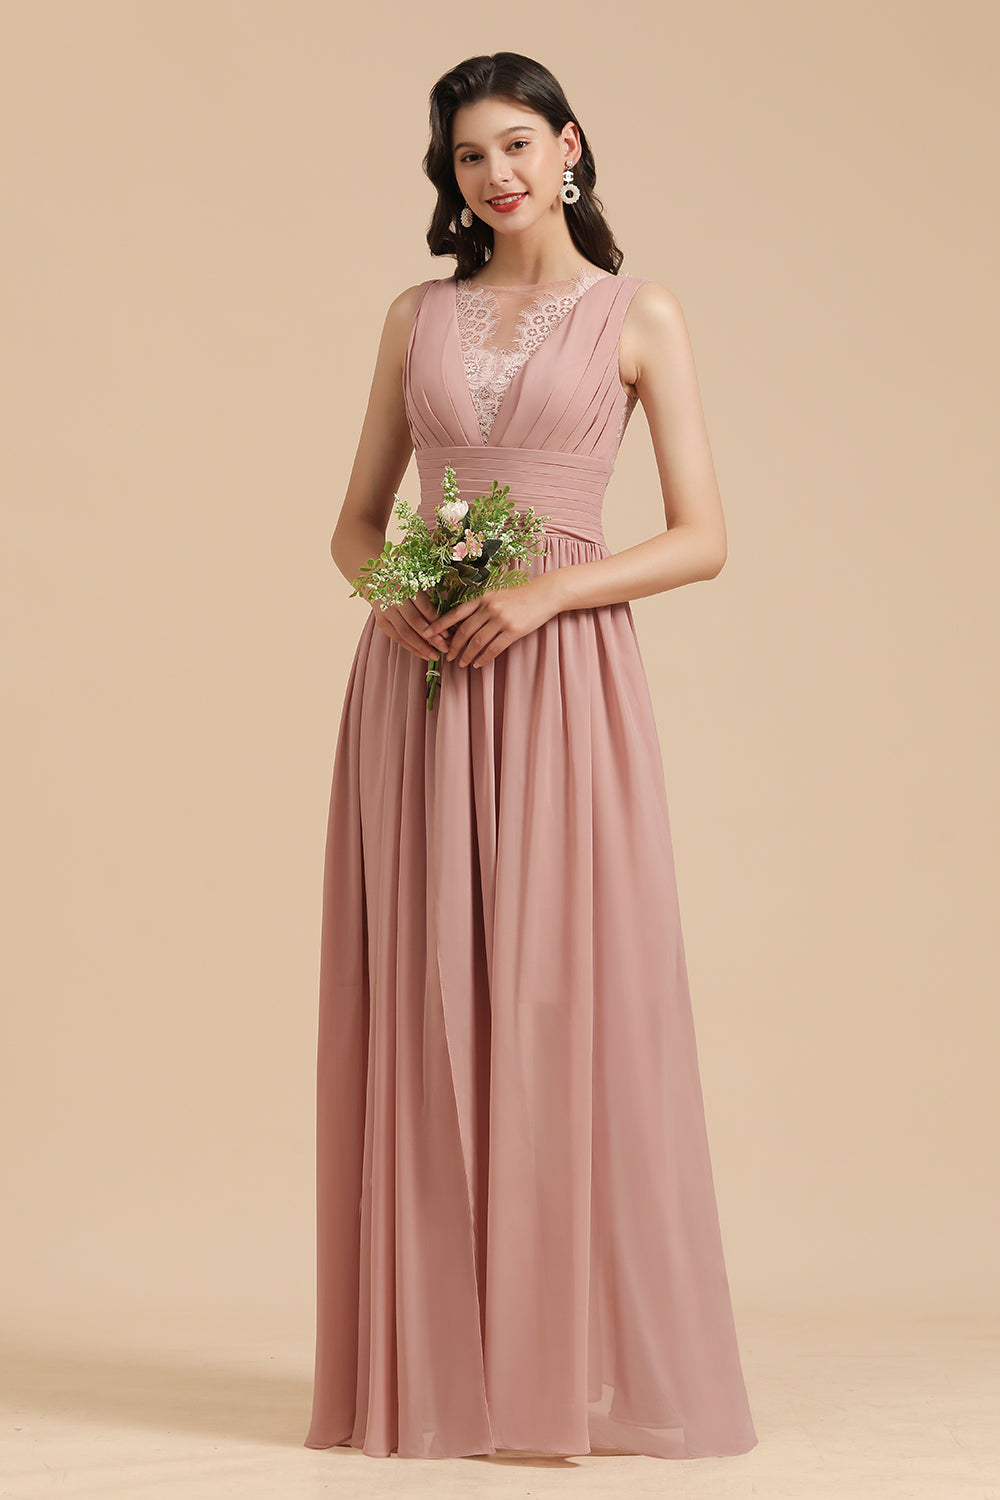 Dusty Rose Chiffon V-Neck Bridesmaid Dress Long-27dress